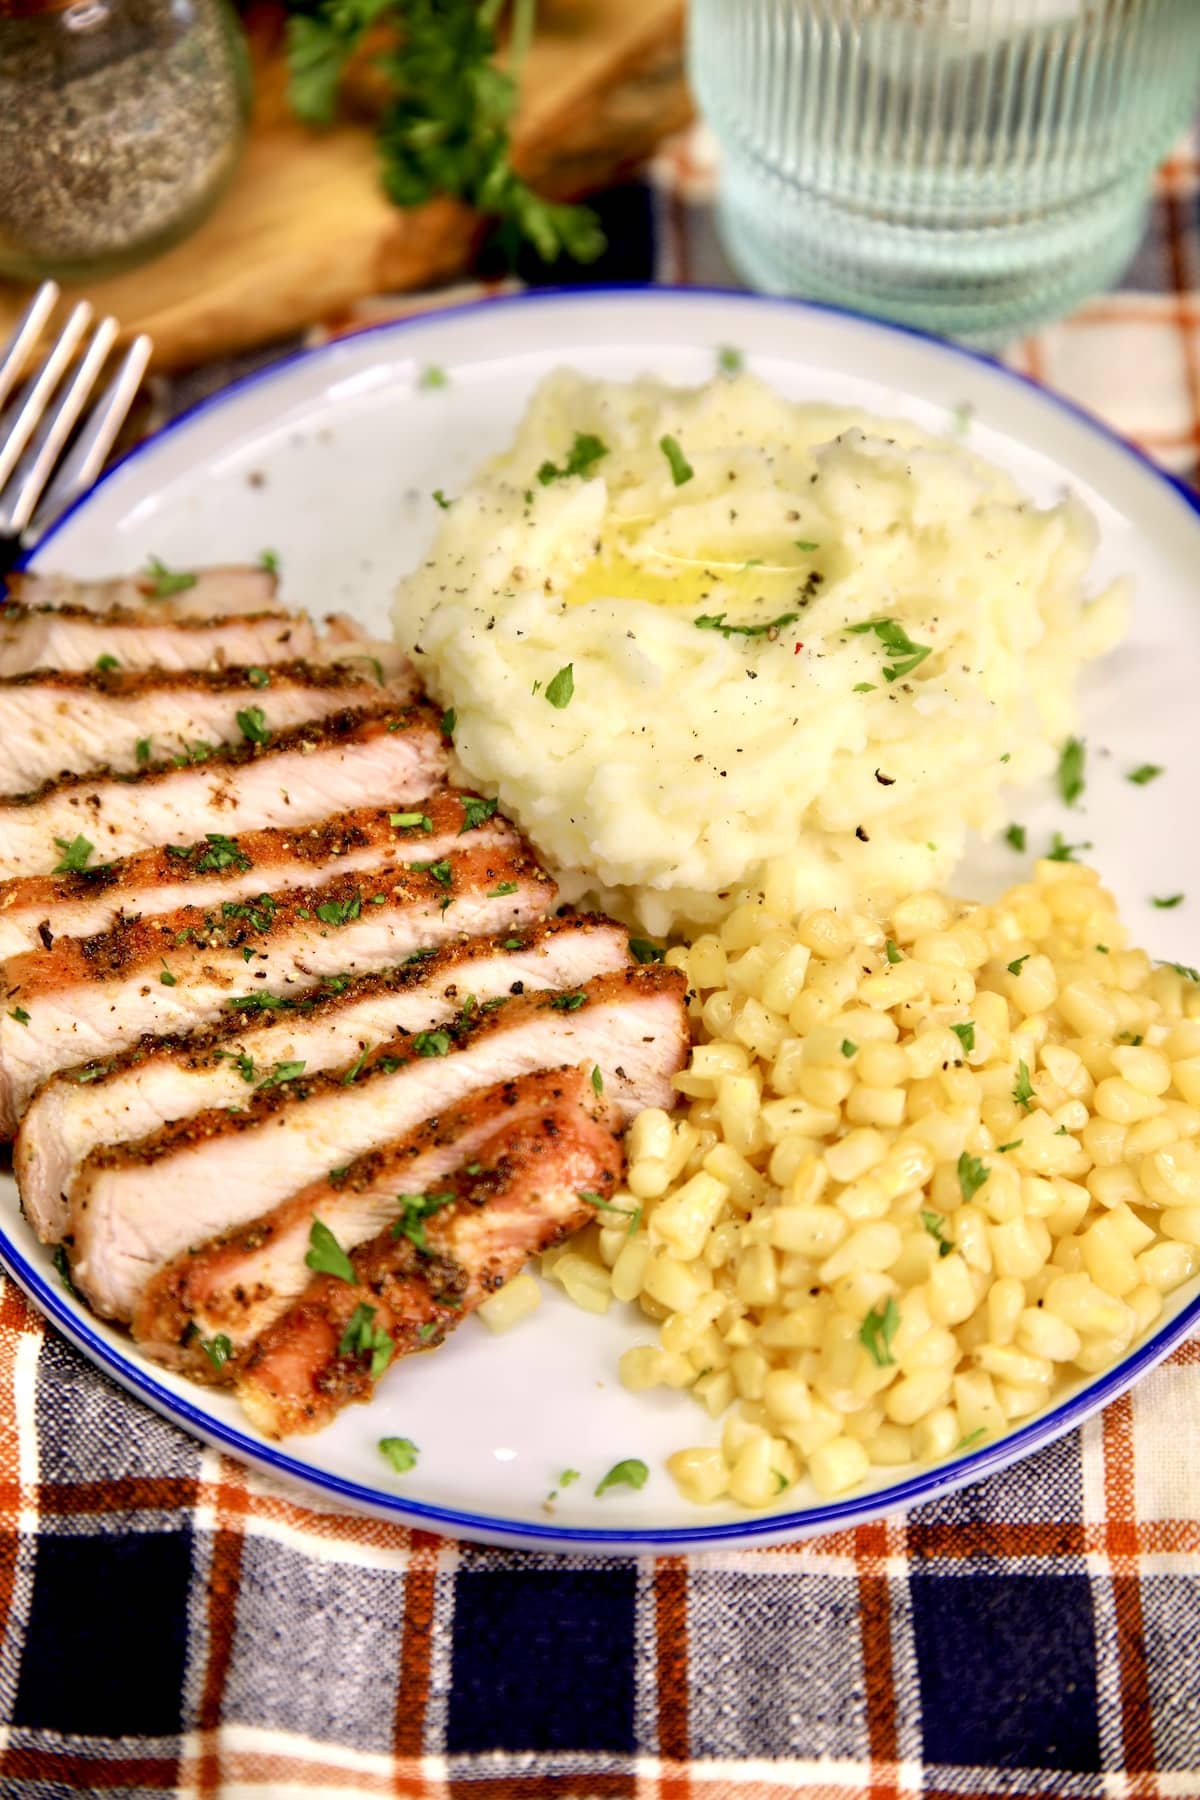 Plate with sliced pork chop, mashed potatoes, corn.